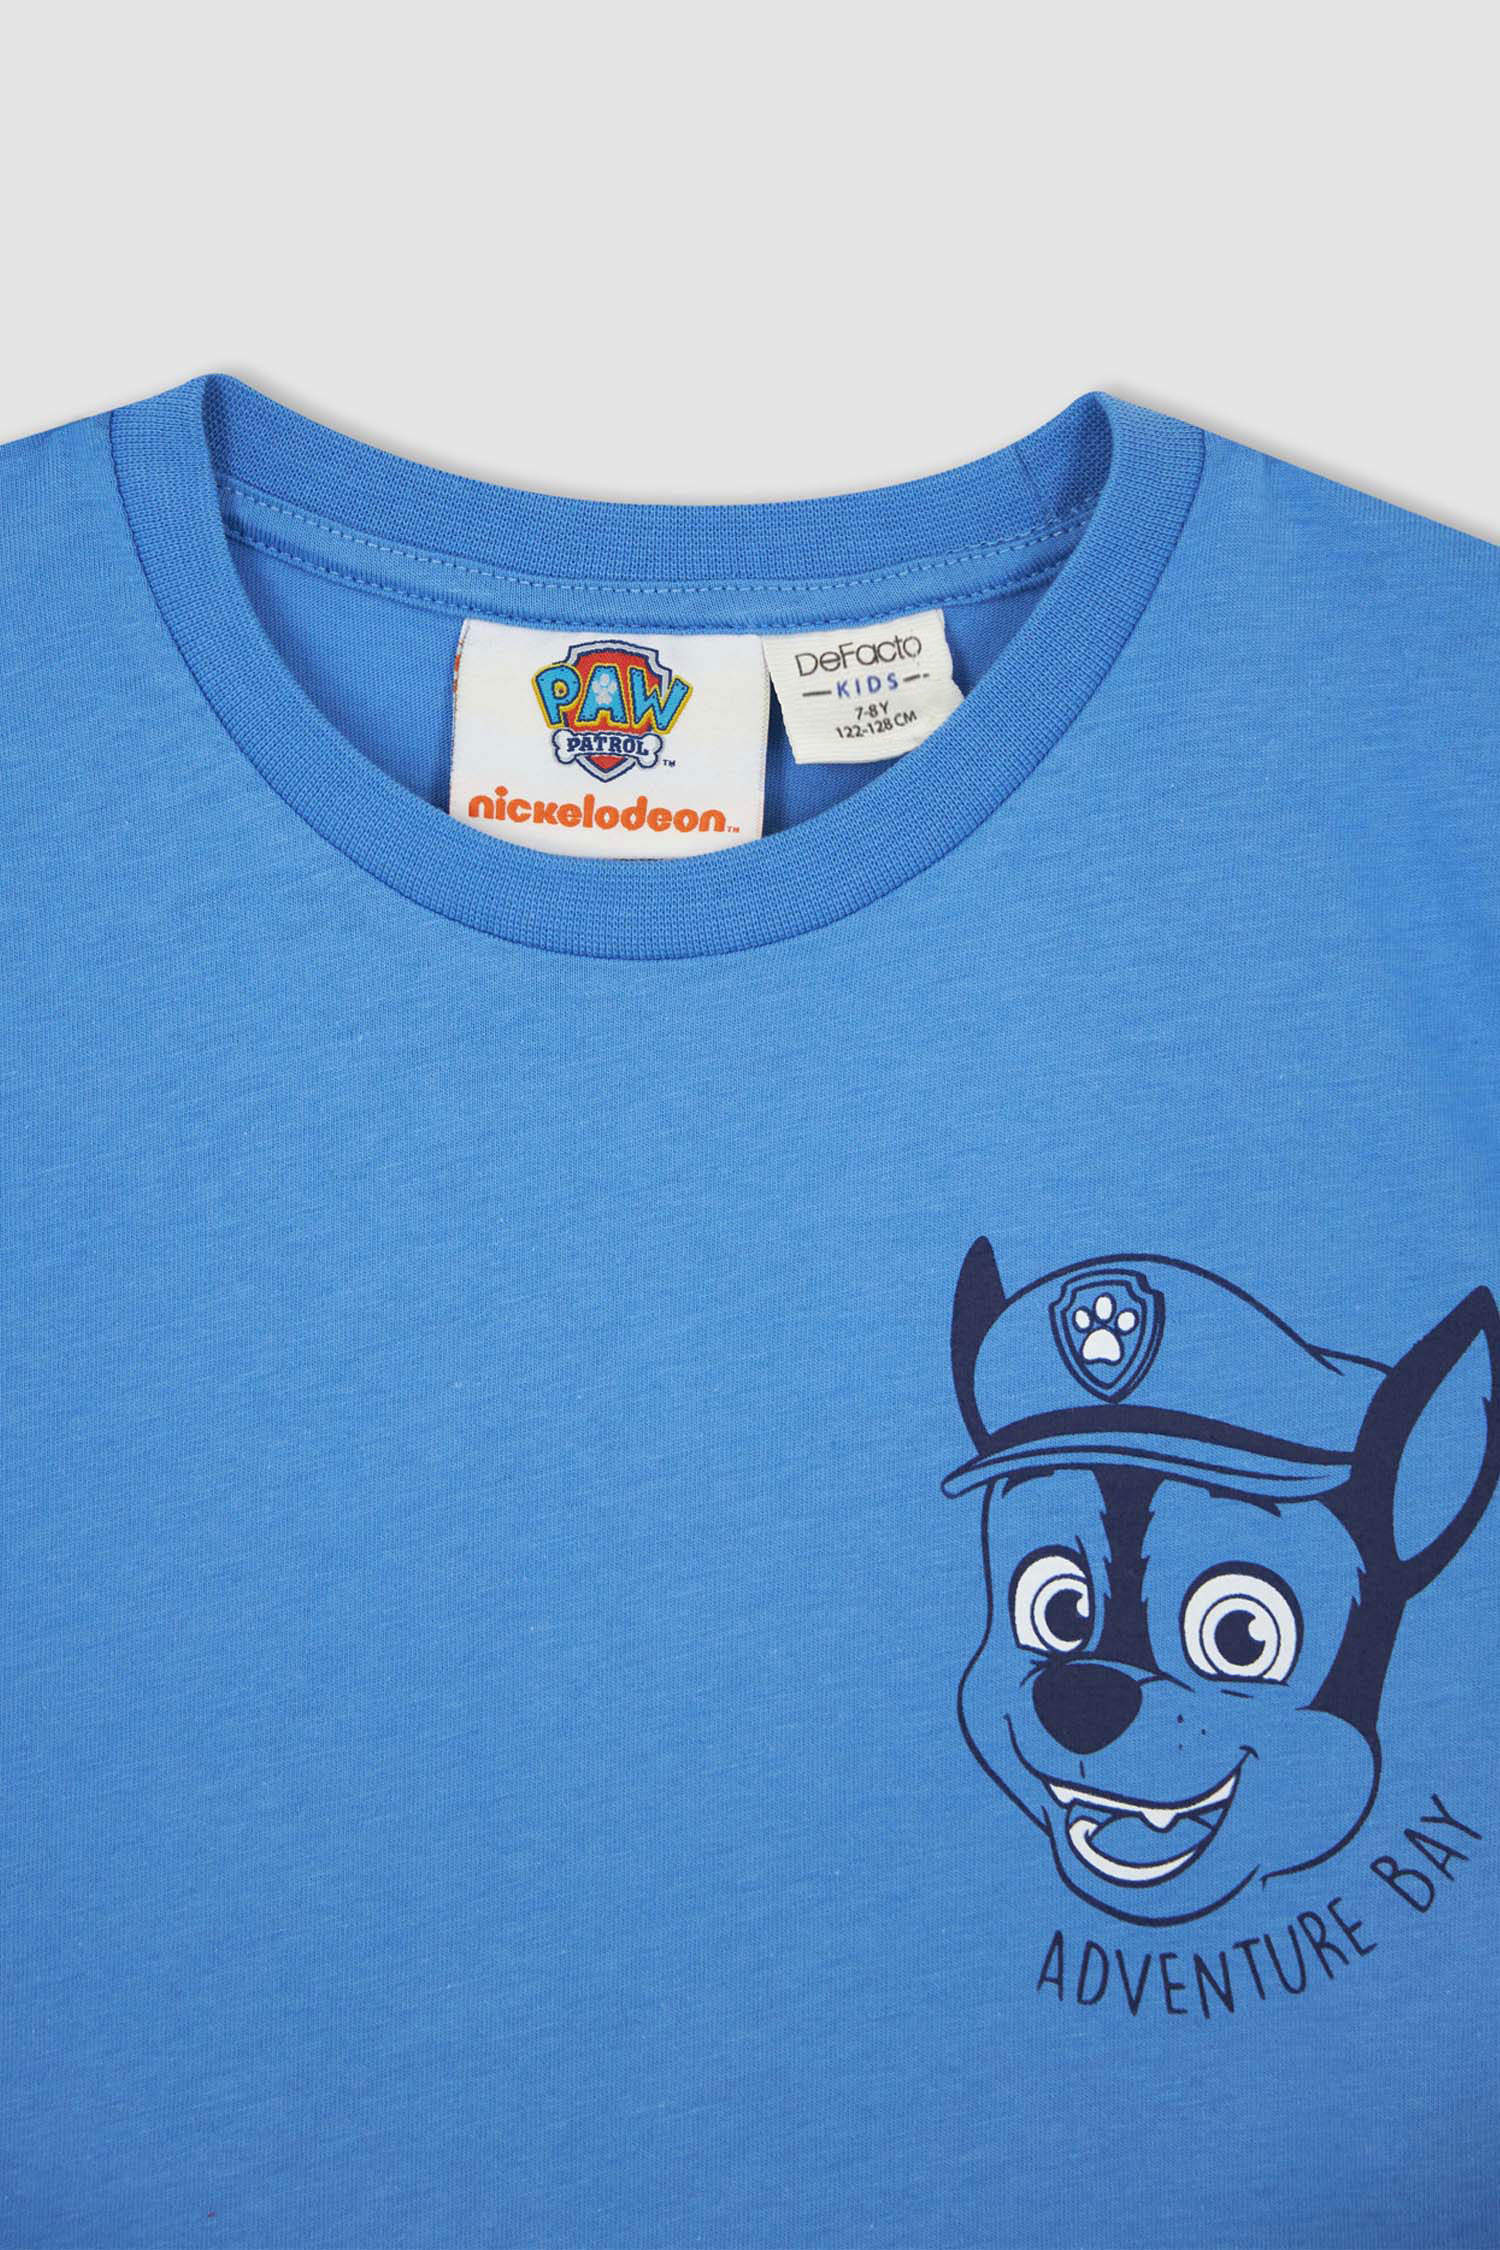 Top Fully Licensed Product Disney Paw Patrol Boys Short Sleeve Tshirt T Shirt 